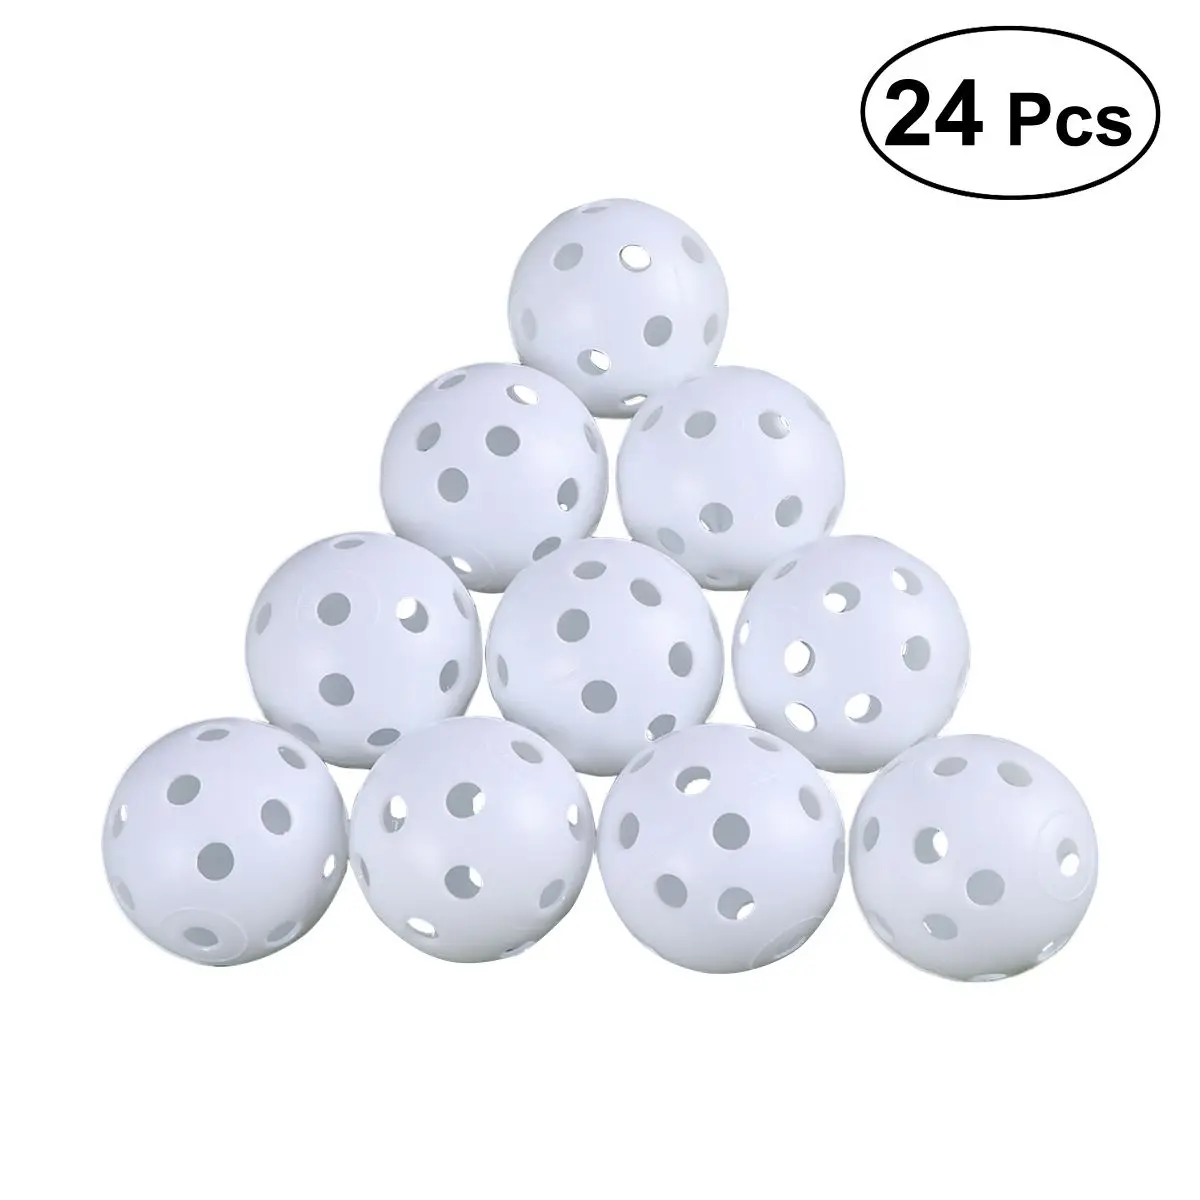 

24pcs Golf Balls Portative Small Plastic Training Balls for Training